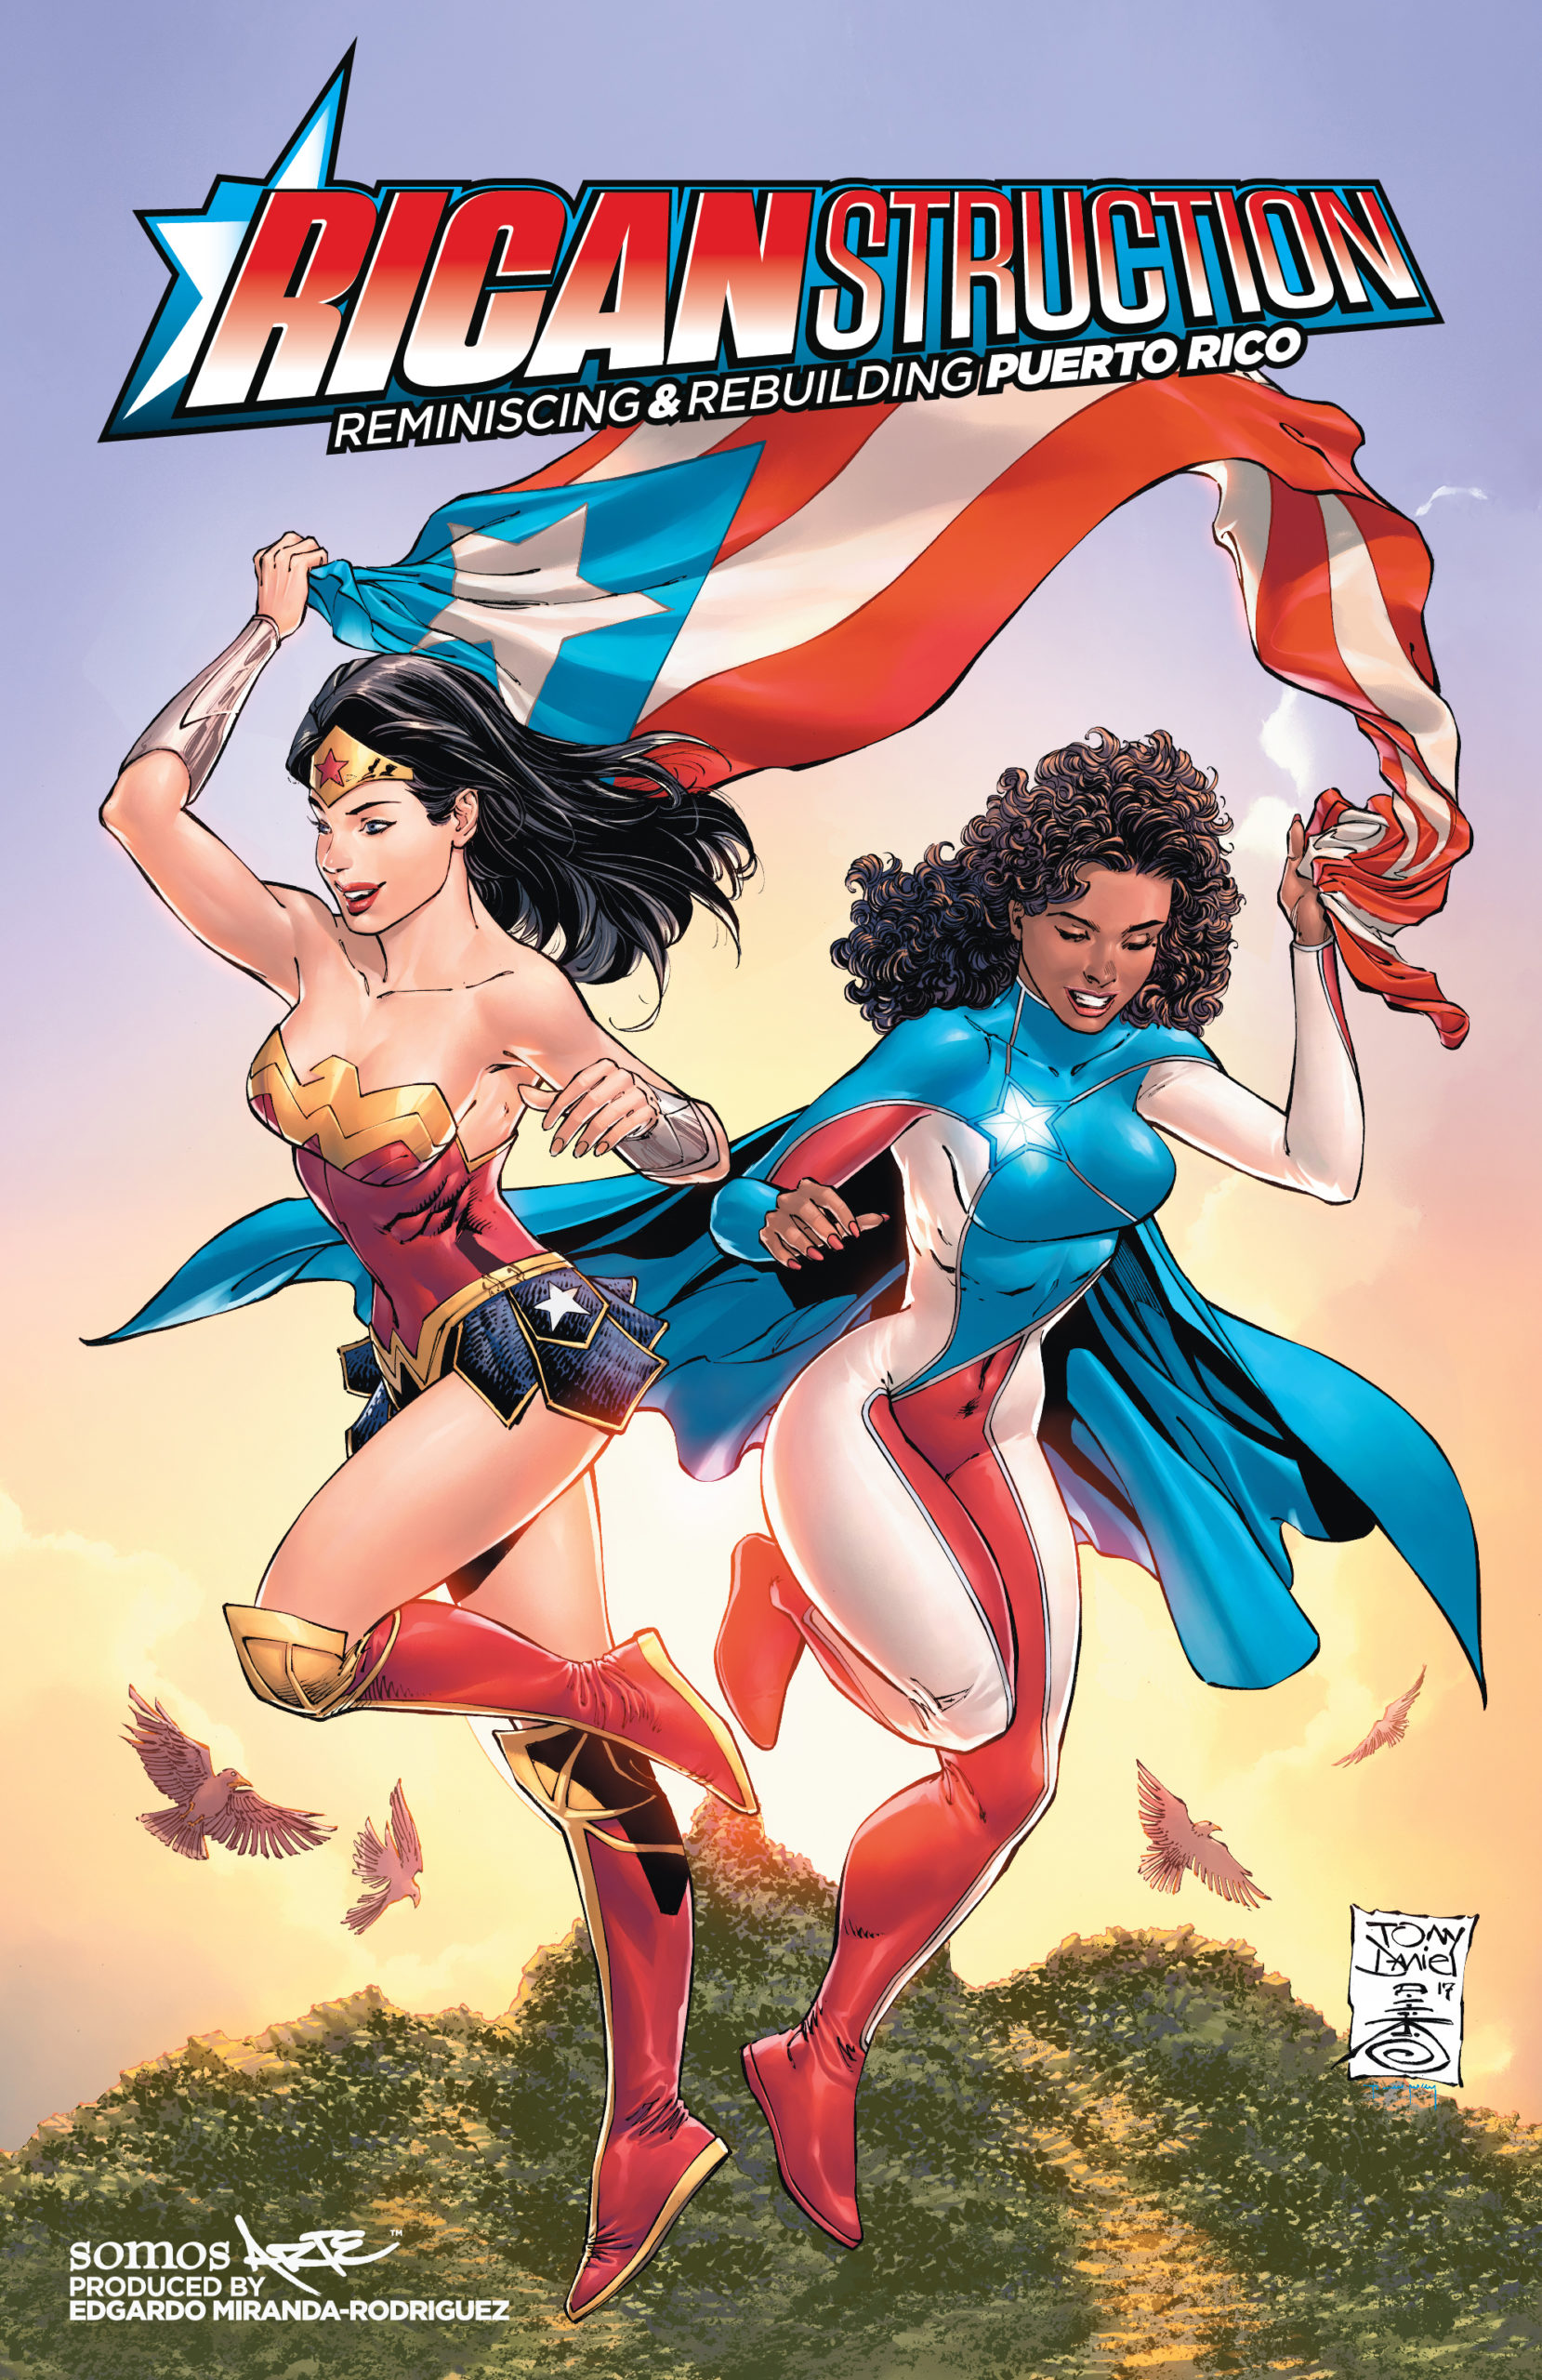 DC’s Heroes Are Teaming Up With La Borinqueña To Benefit Puerto Rico 